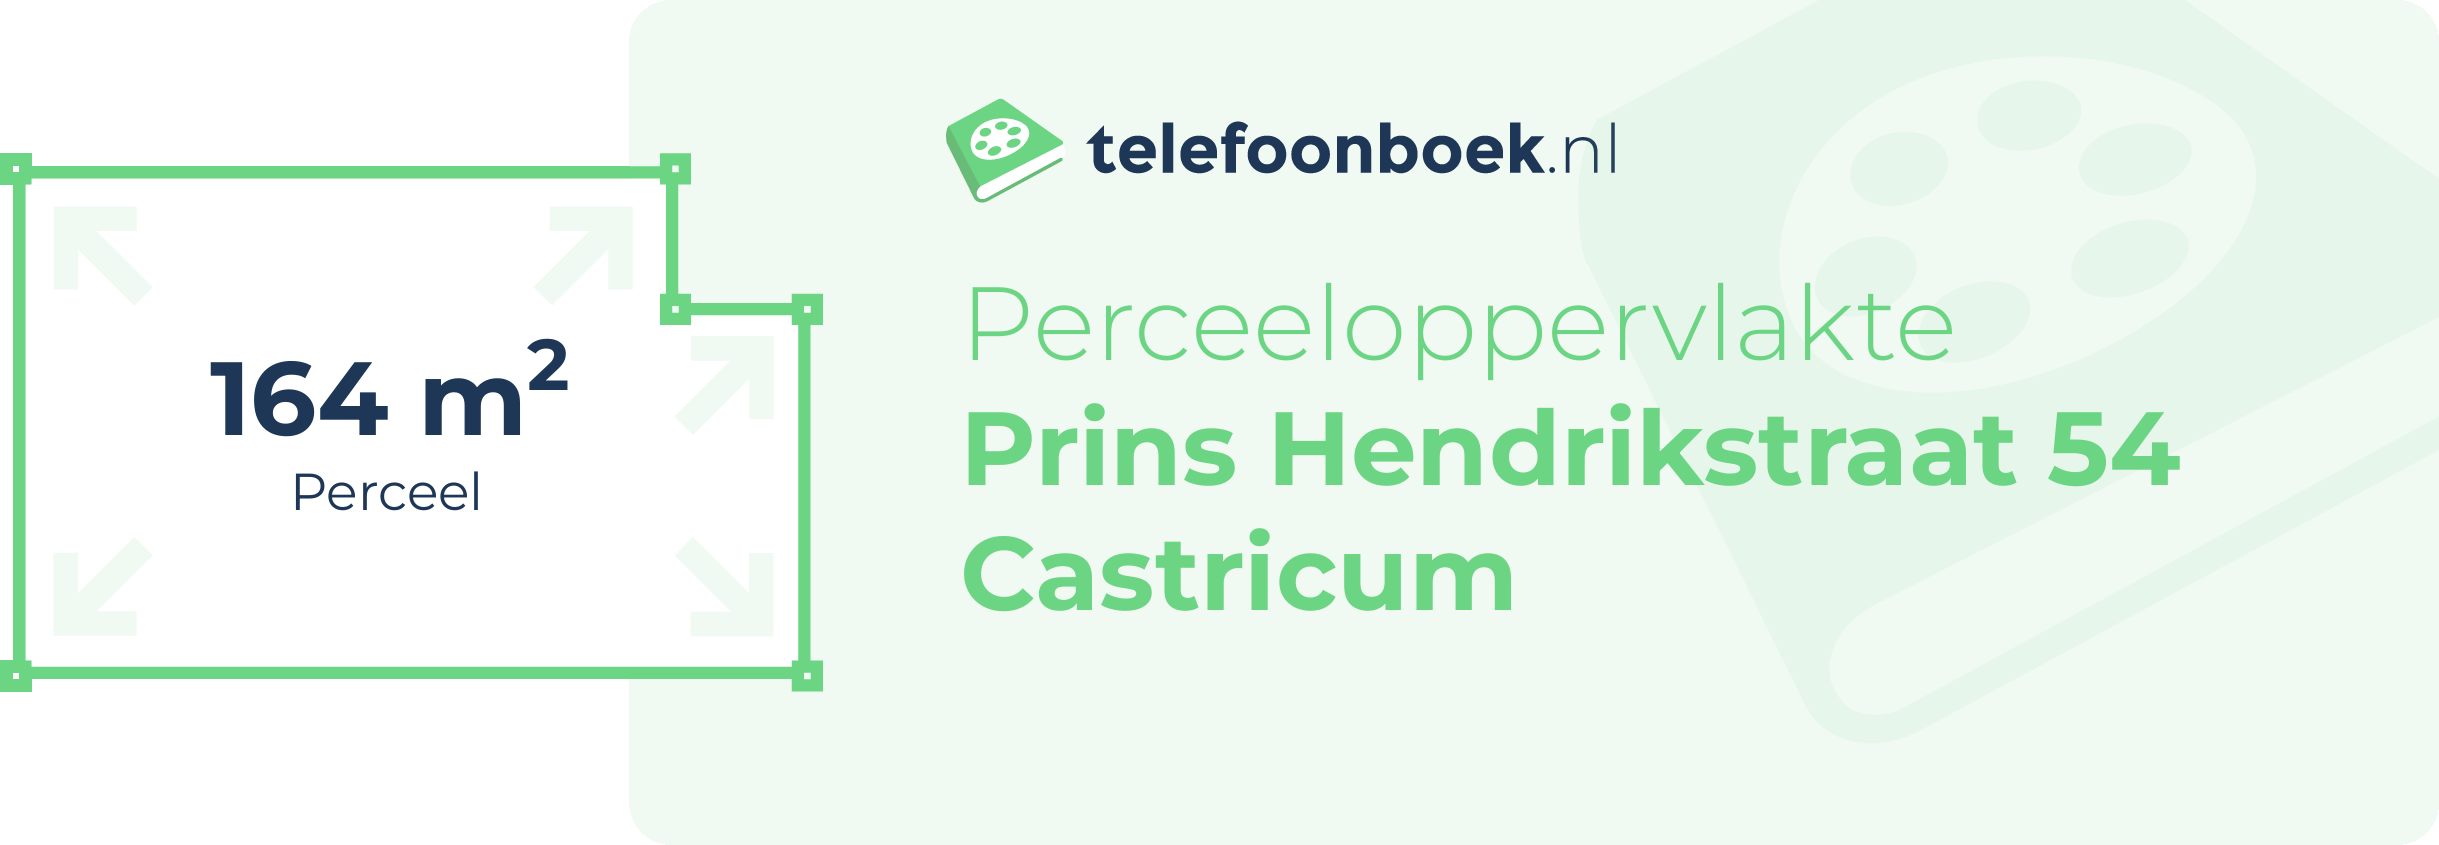 Perceeloppervlakte Prins Hendrikstraat 54 Castricum